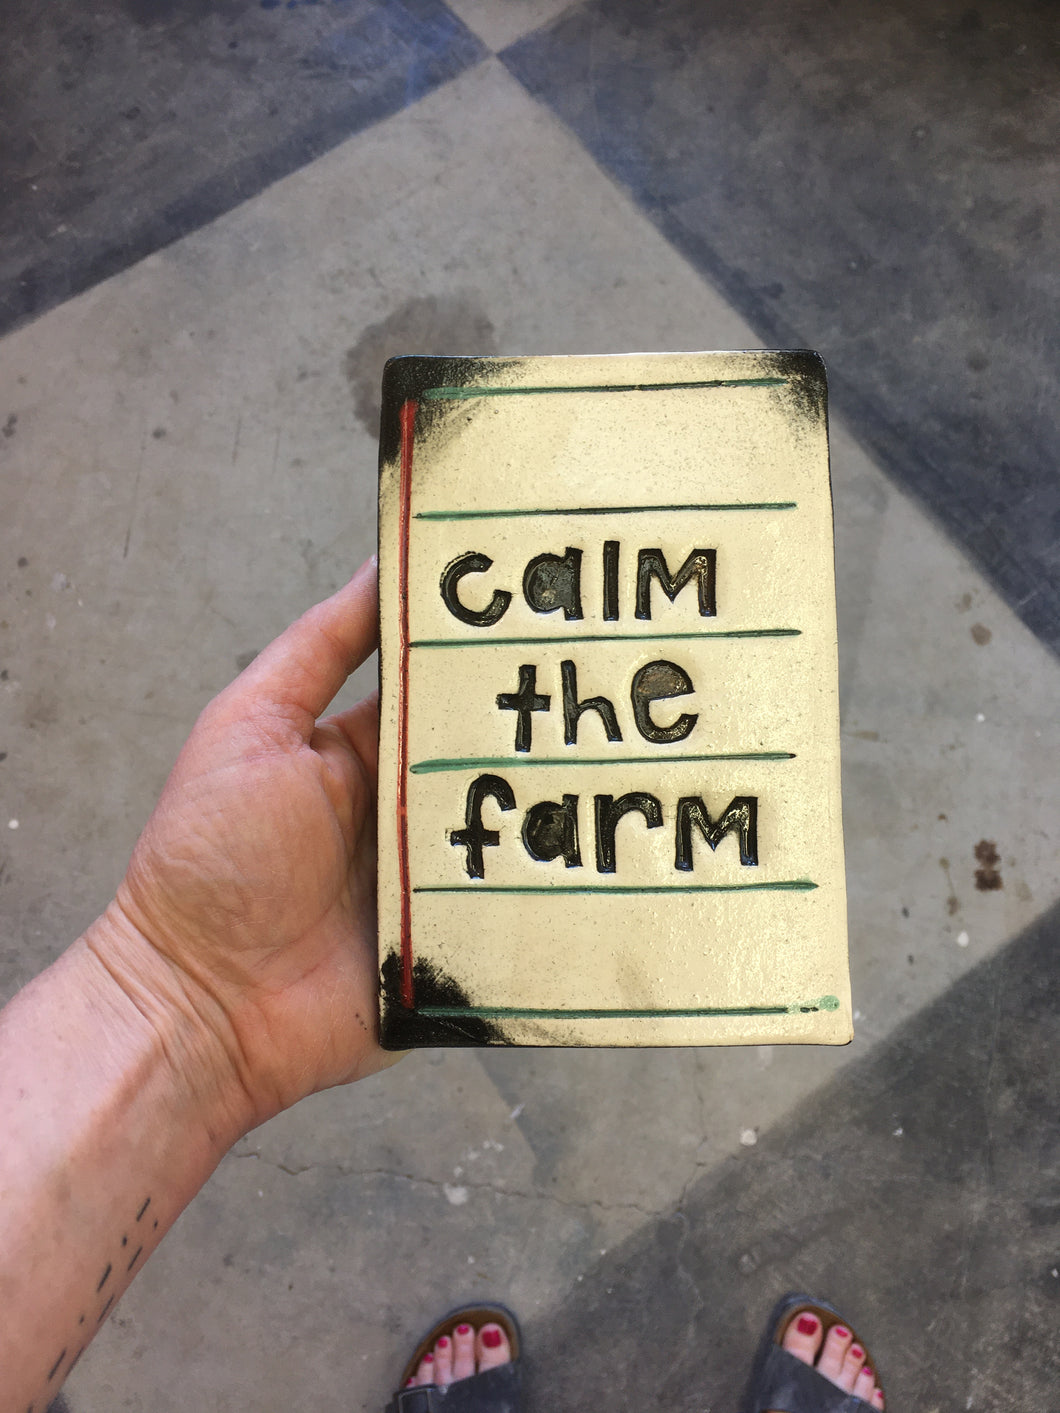 Calm the farm tile.